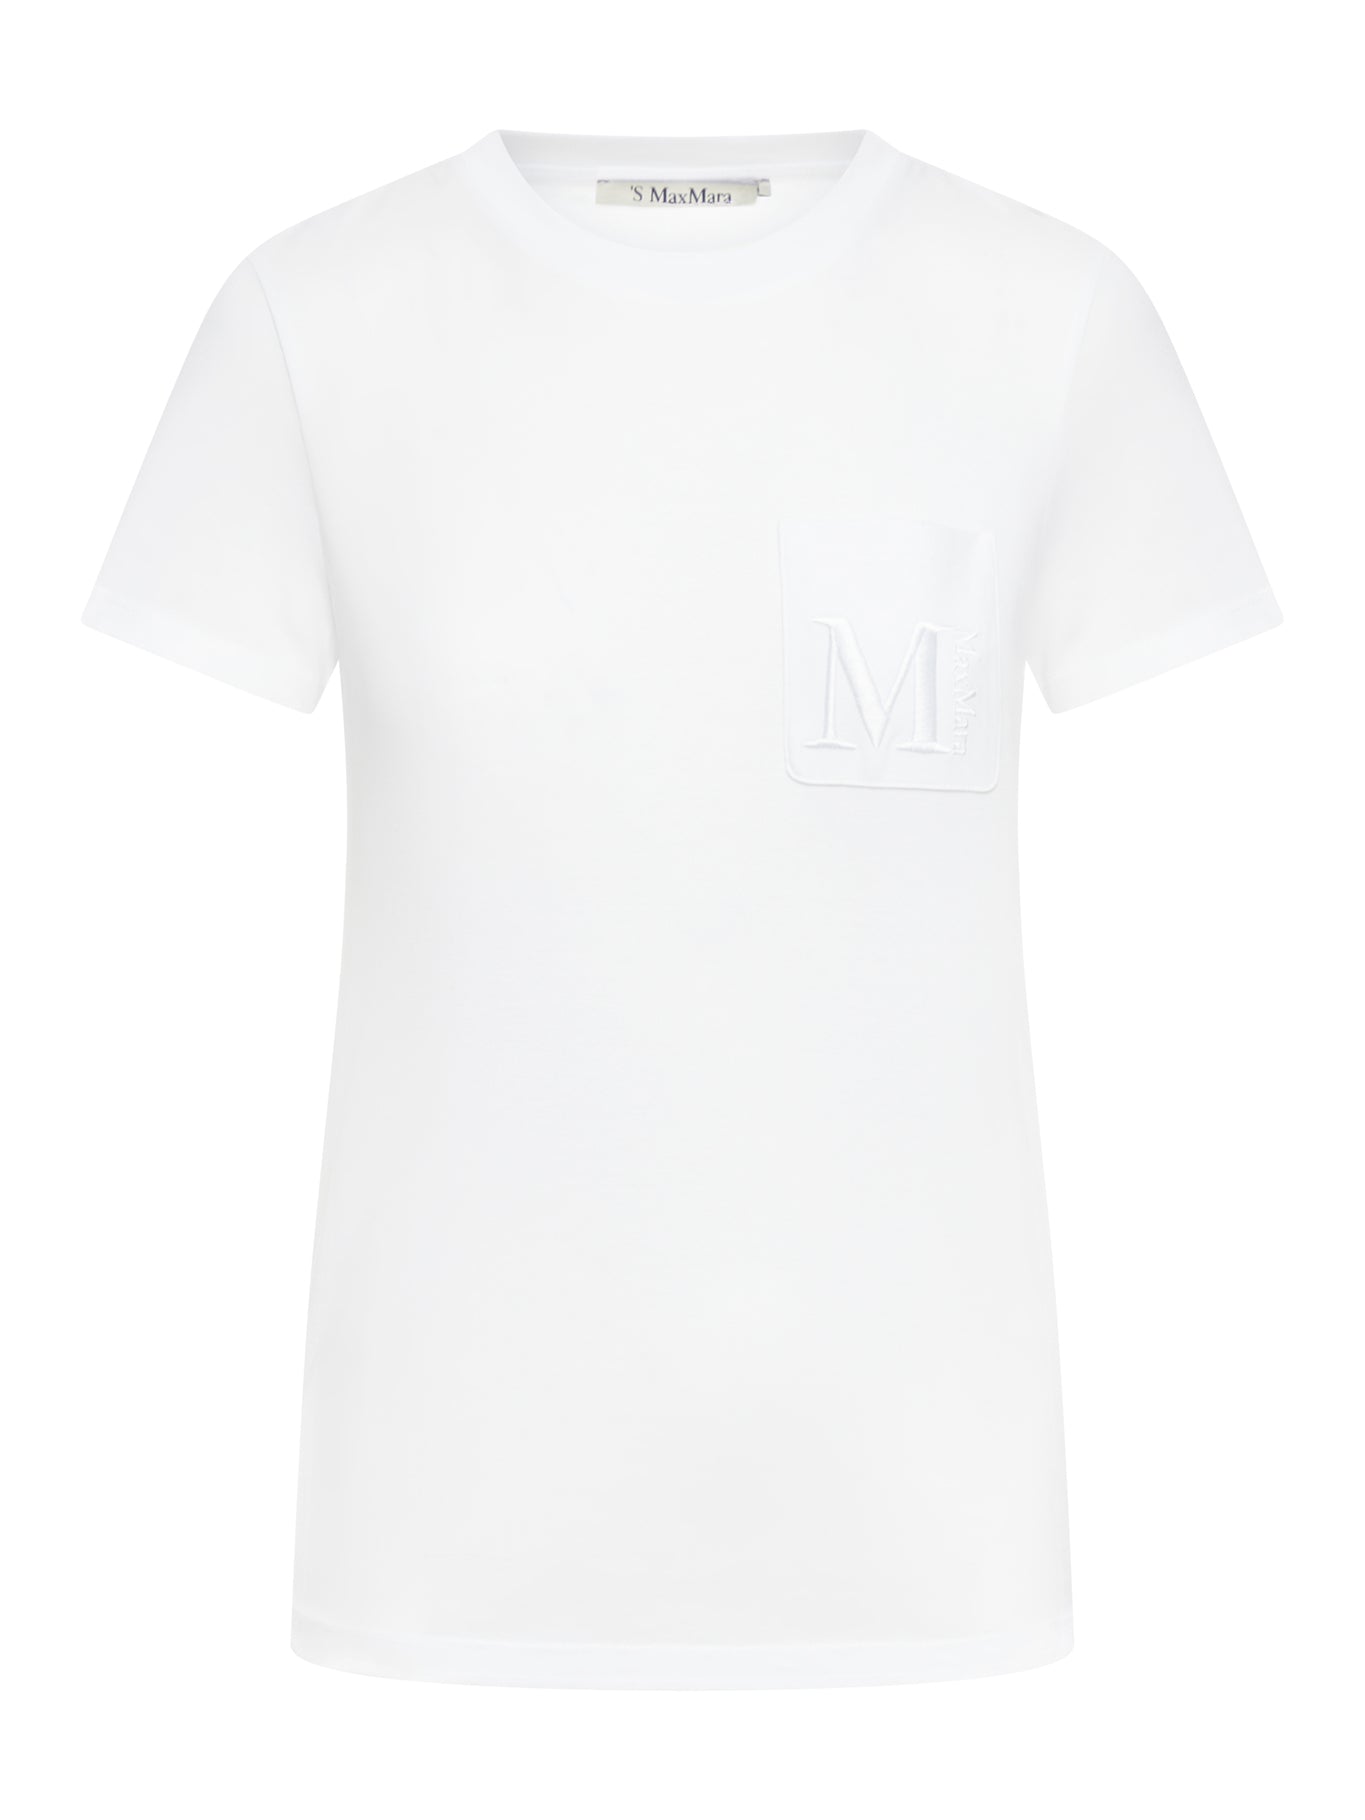 T-shirt Madera in cotone